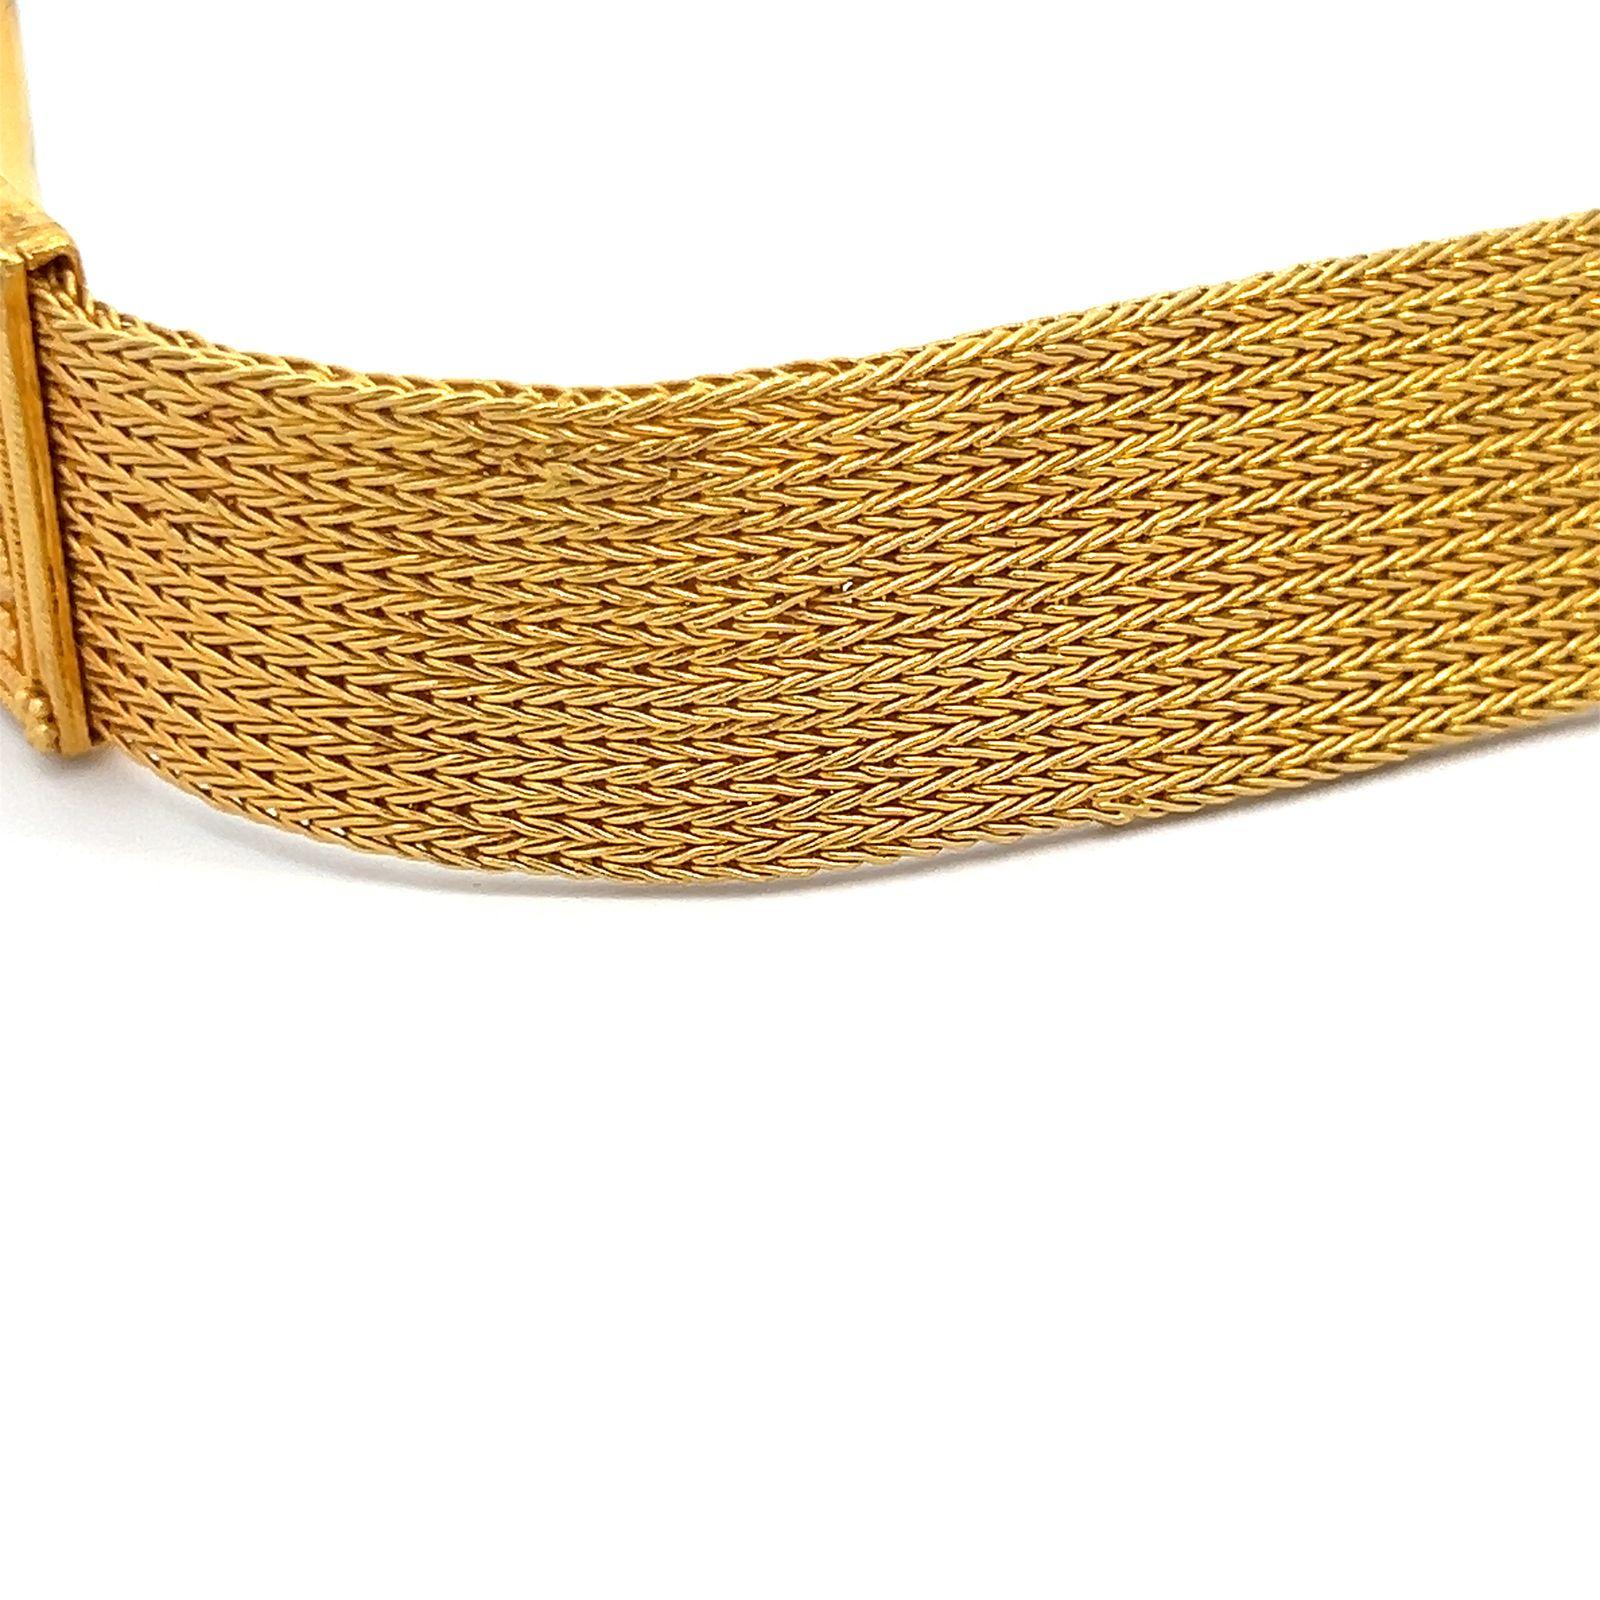  LALAoUNIS Vintage Yellow Gold Woven Bracelet For Sale 3